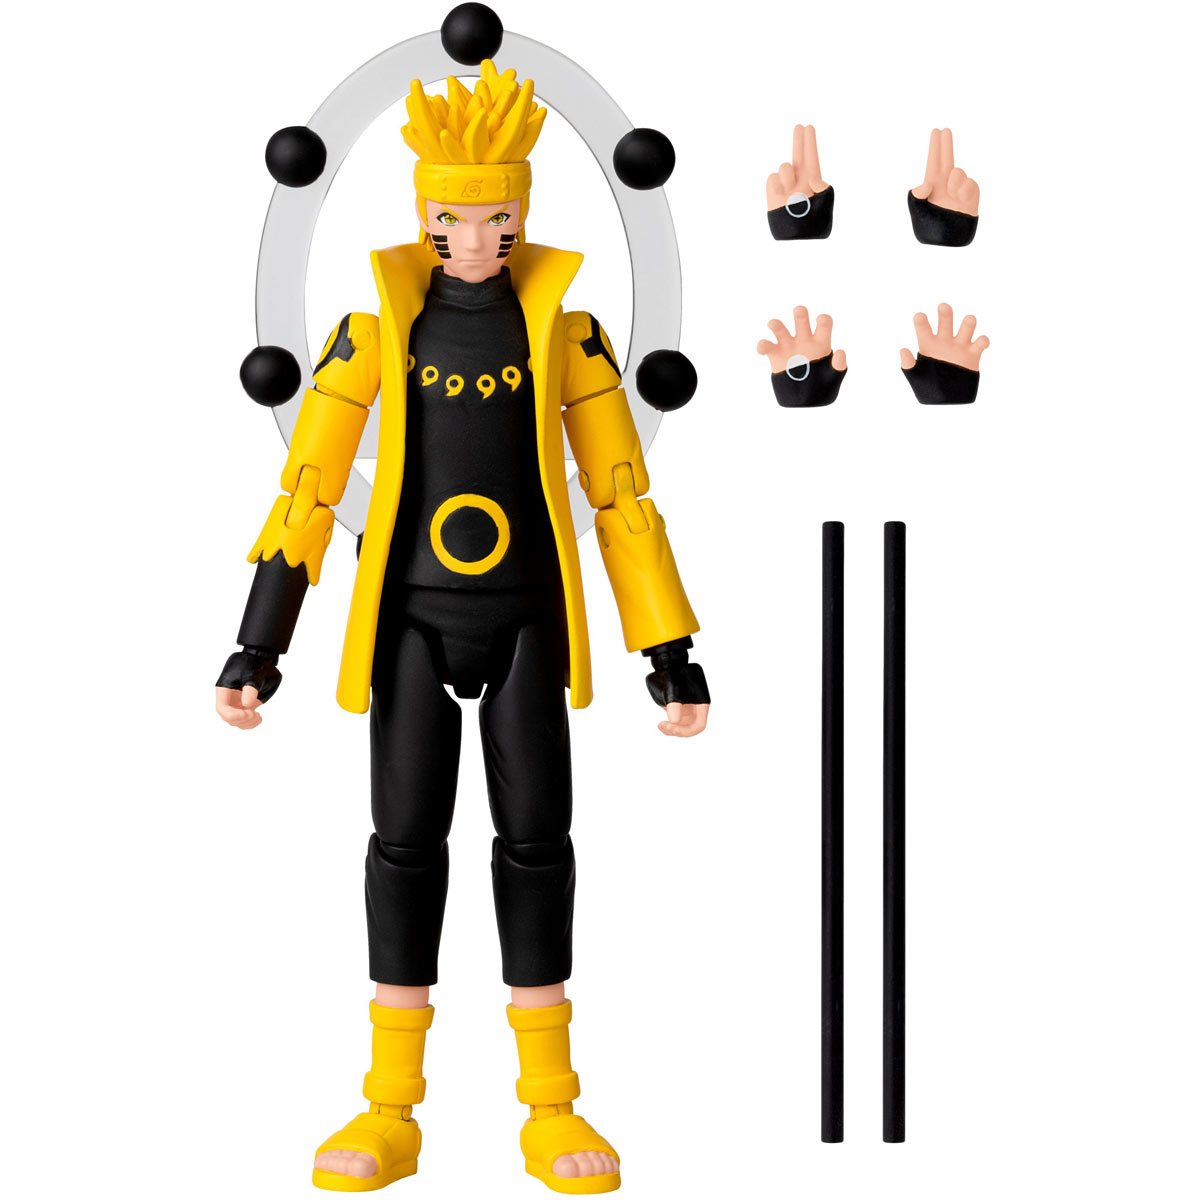 Figurine Naruto animé heroes - Uzumaki Naruto